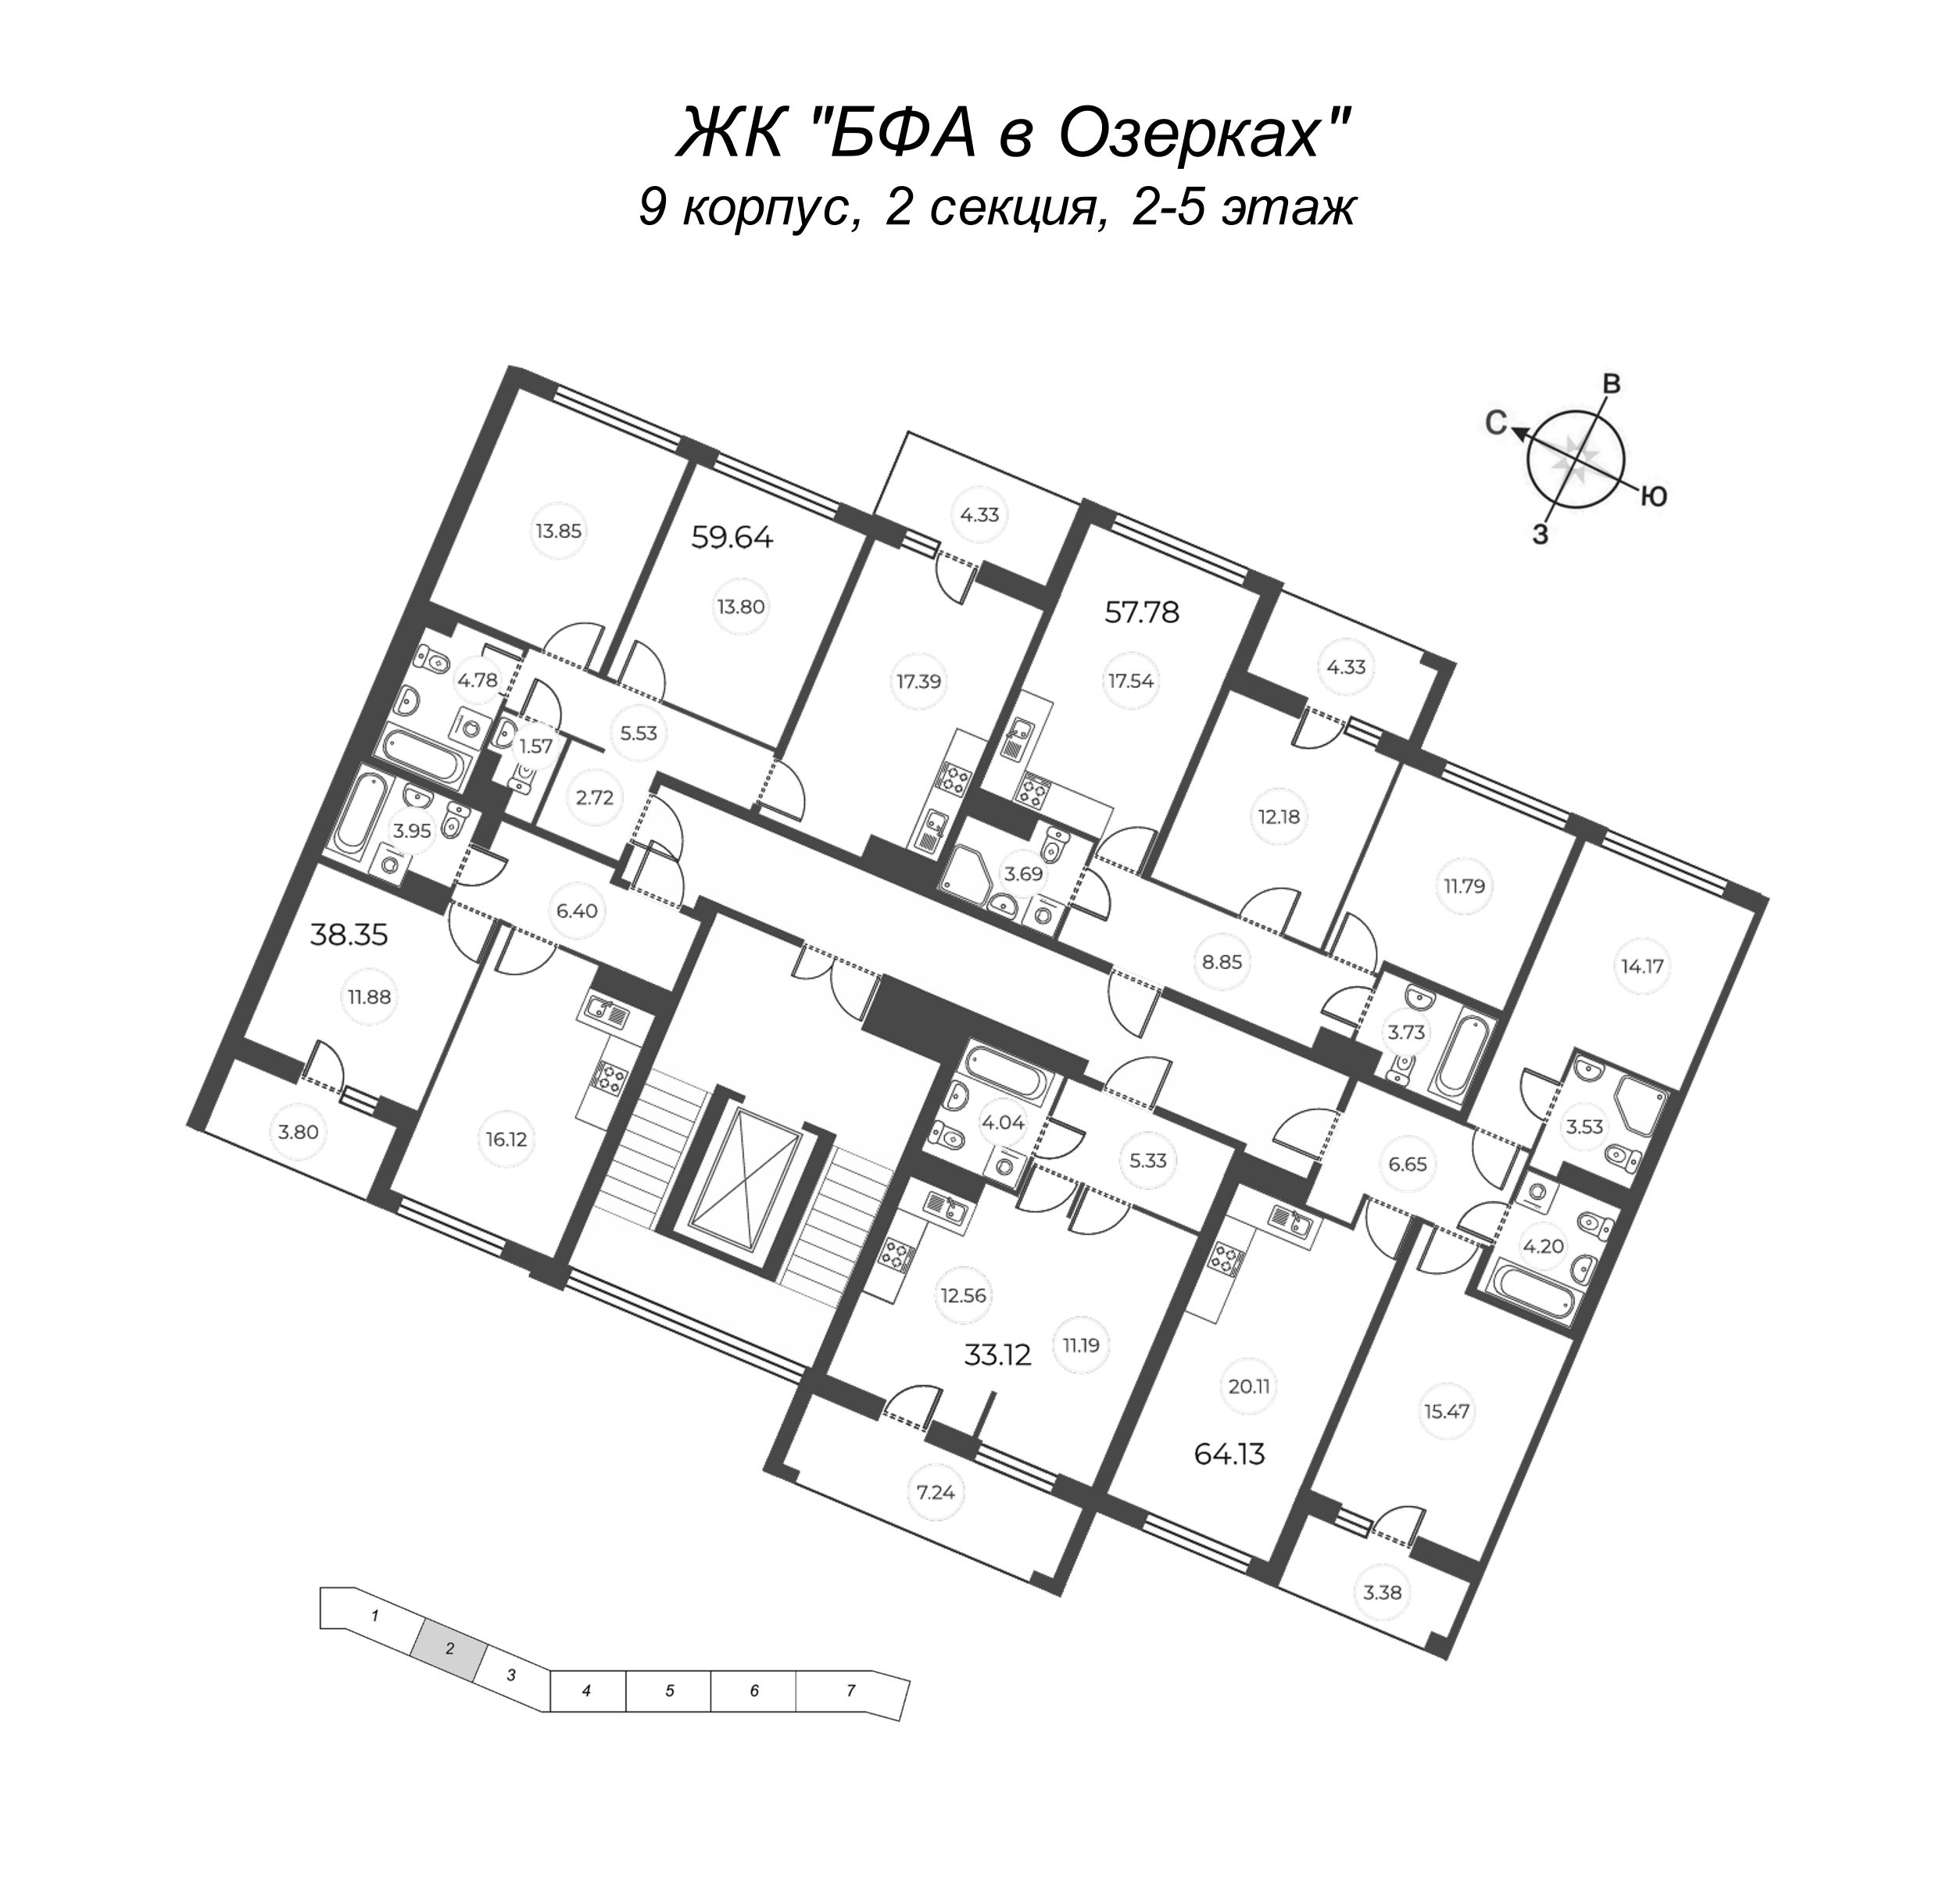 3-комнатная (Евро) квартира, 61.81 м² - планировка этажа